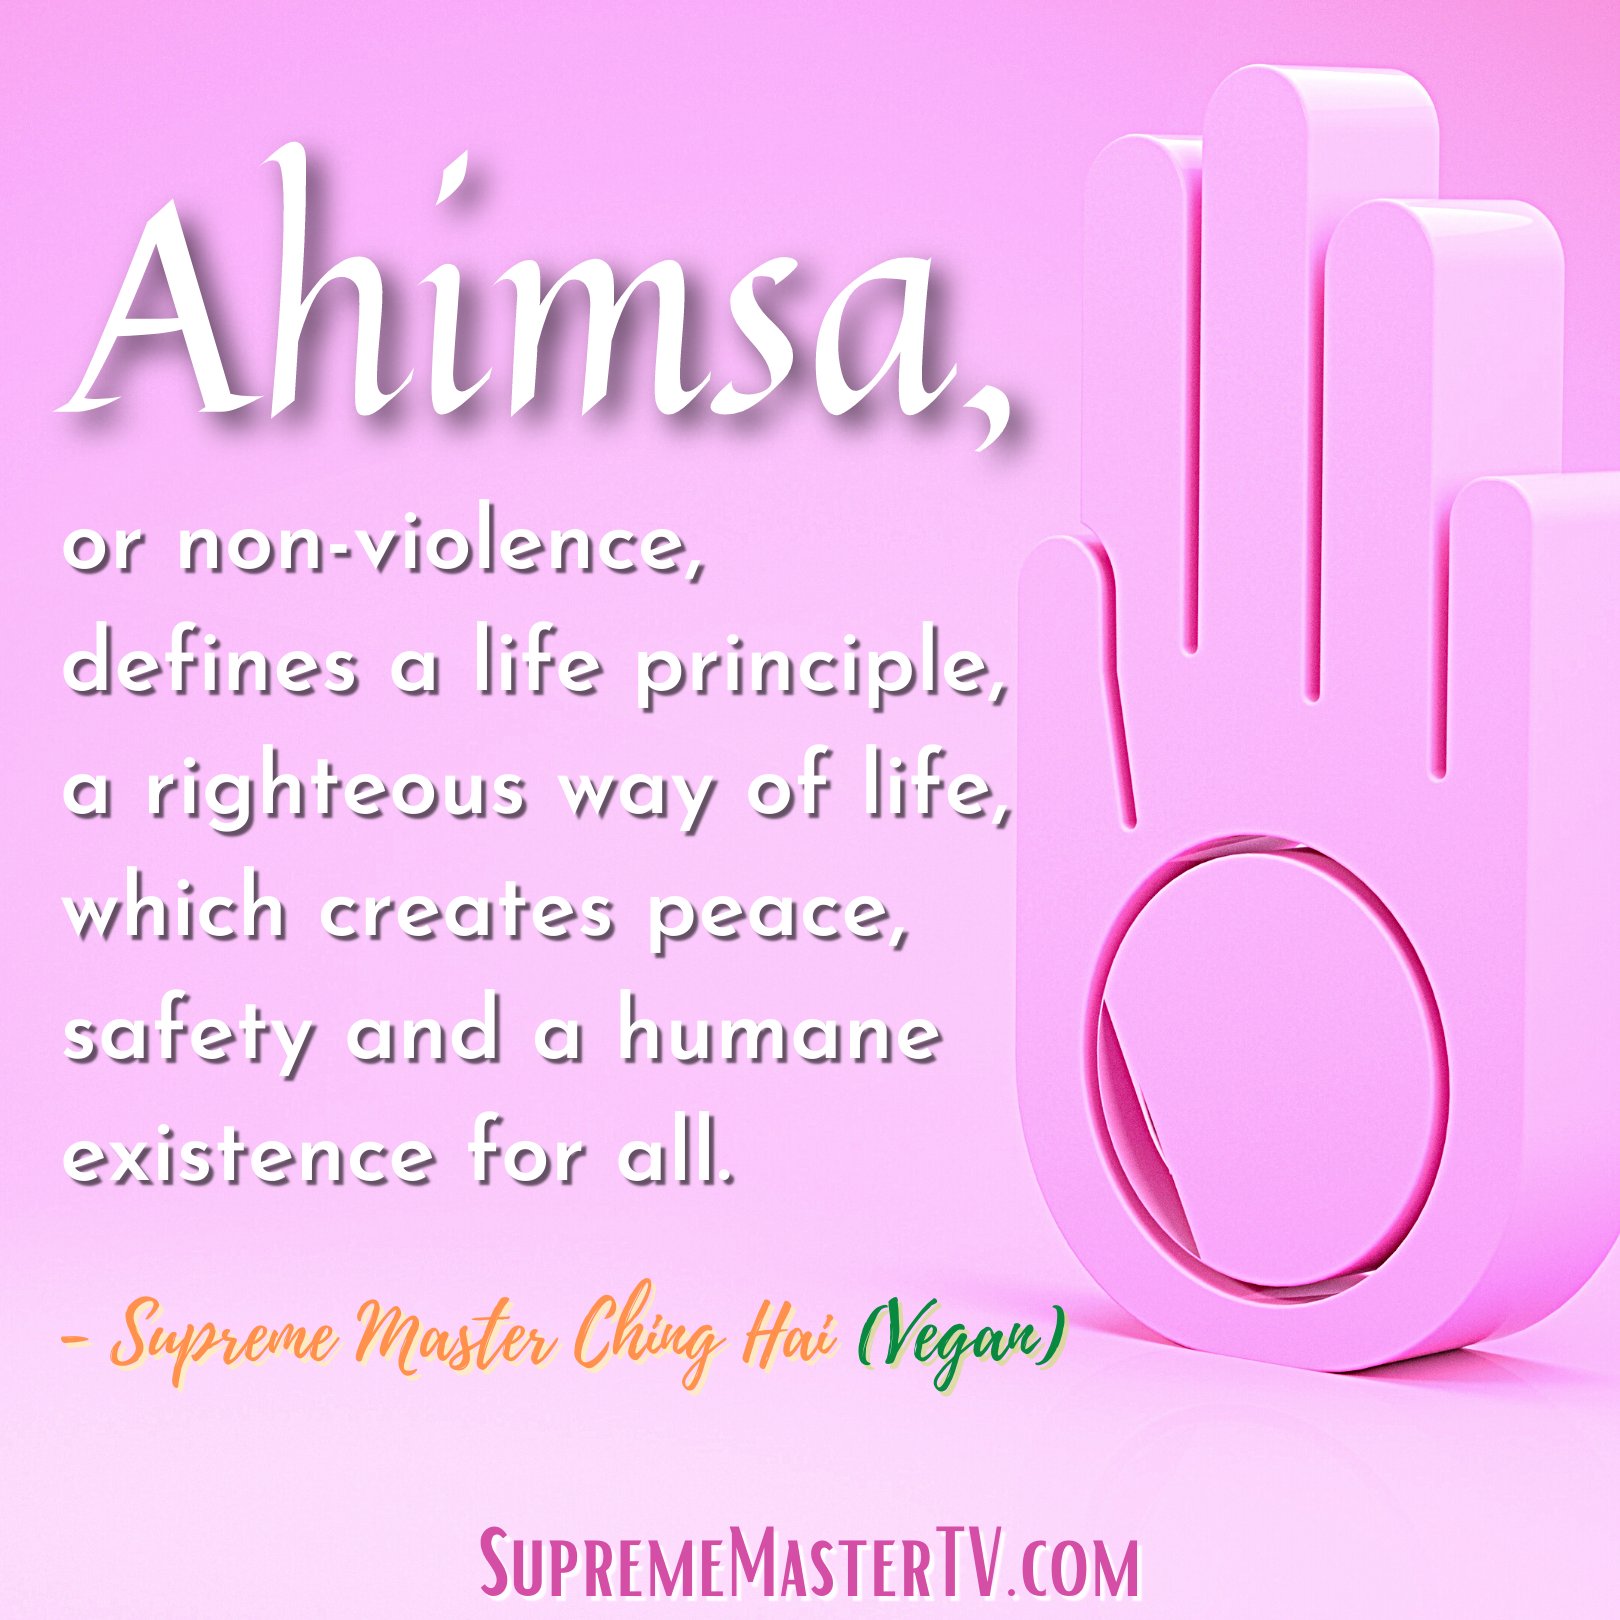 I. Understanding the Ahimsa Principle